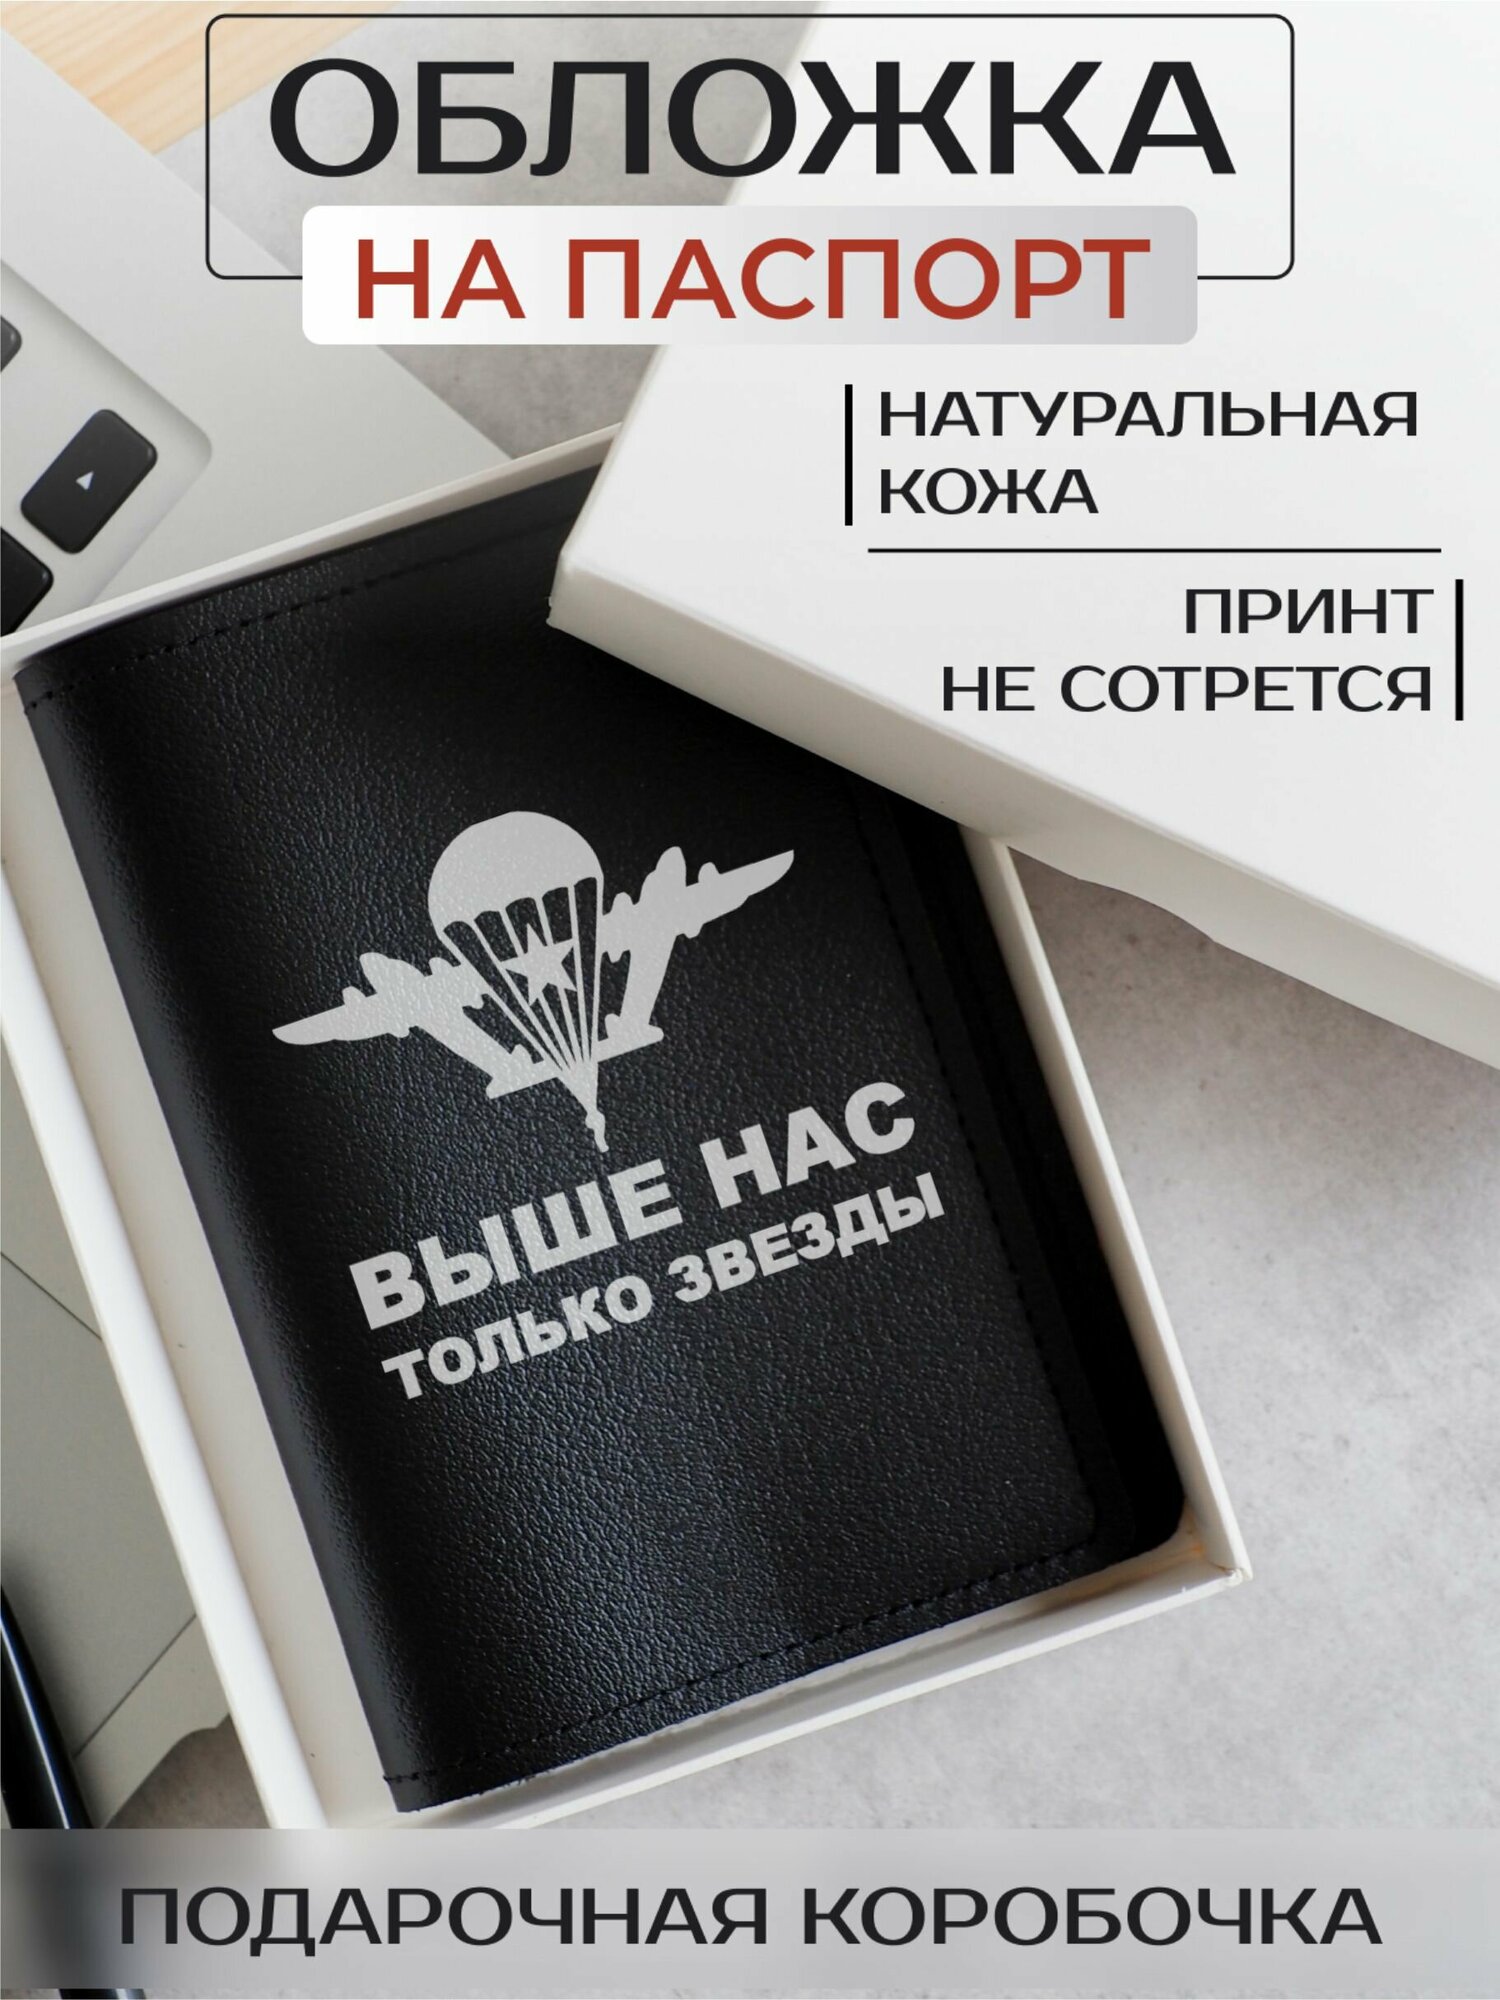 Обложка RUSSIAN HandMade 